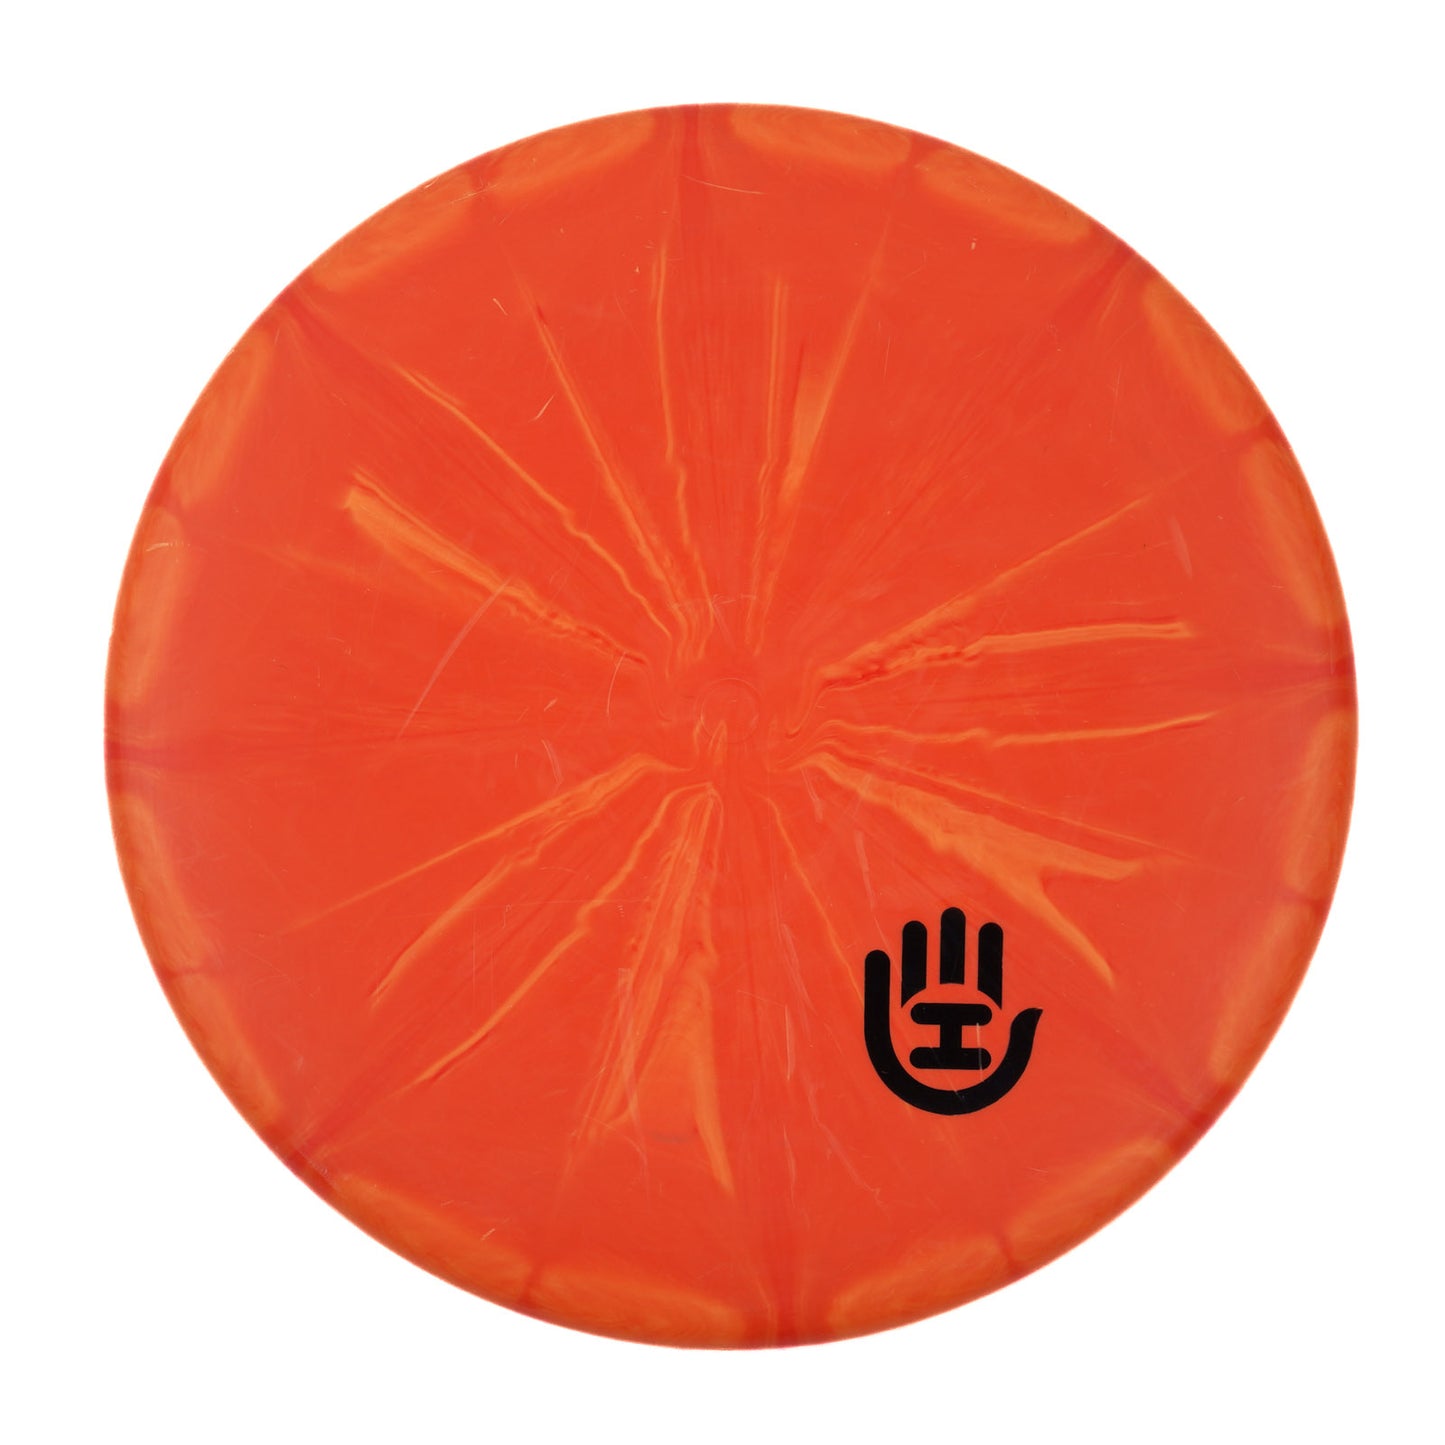 Dynamic Discs Warden - Handeye Prime Burst 175g | Style 0001